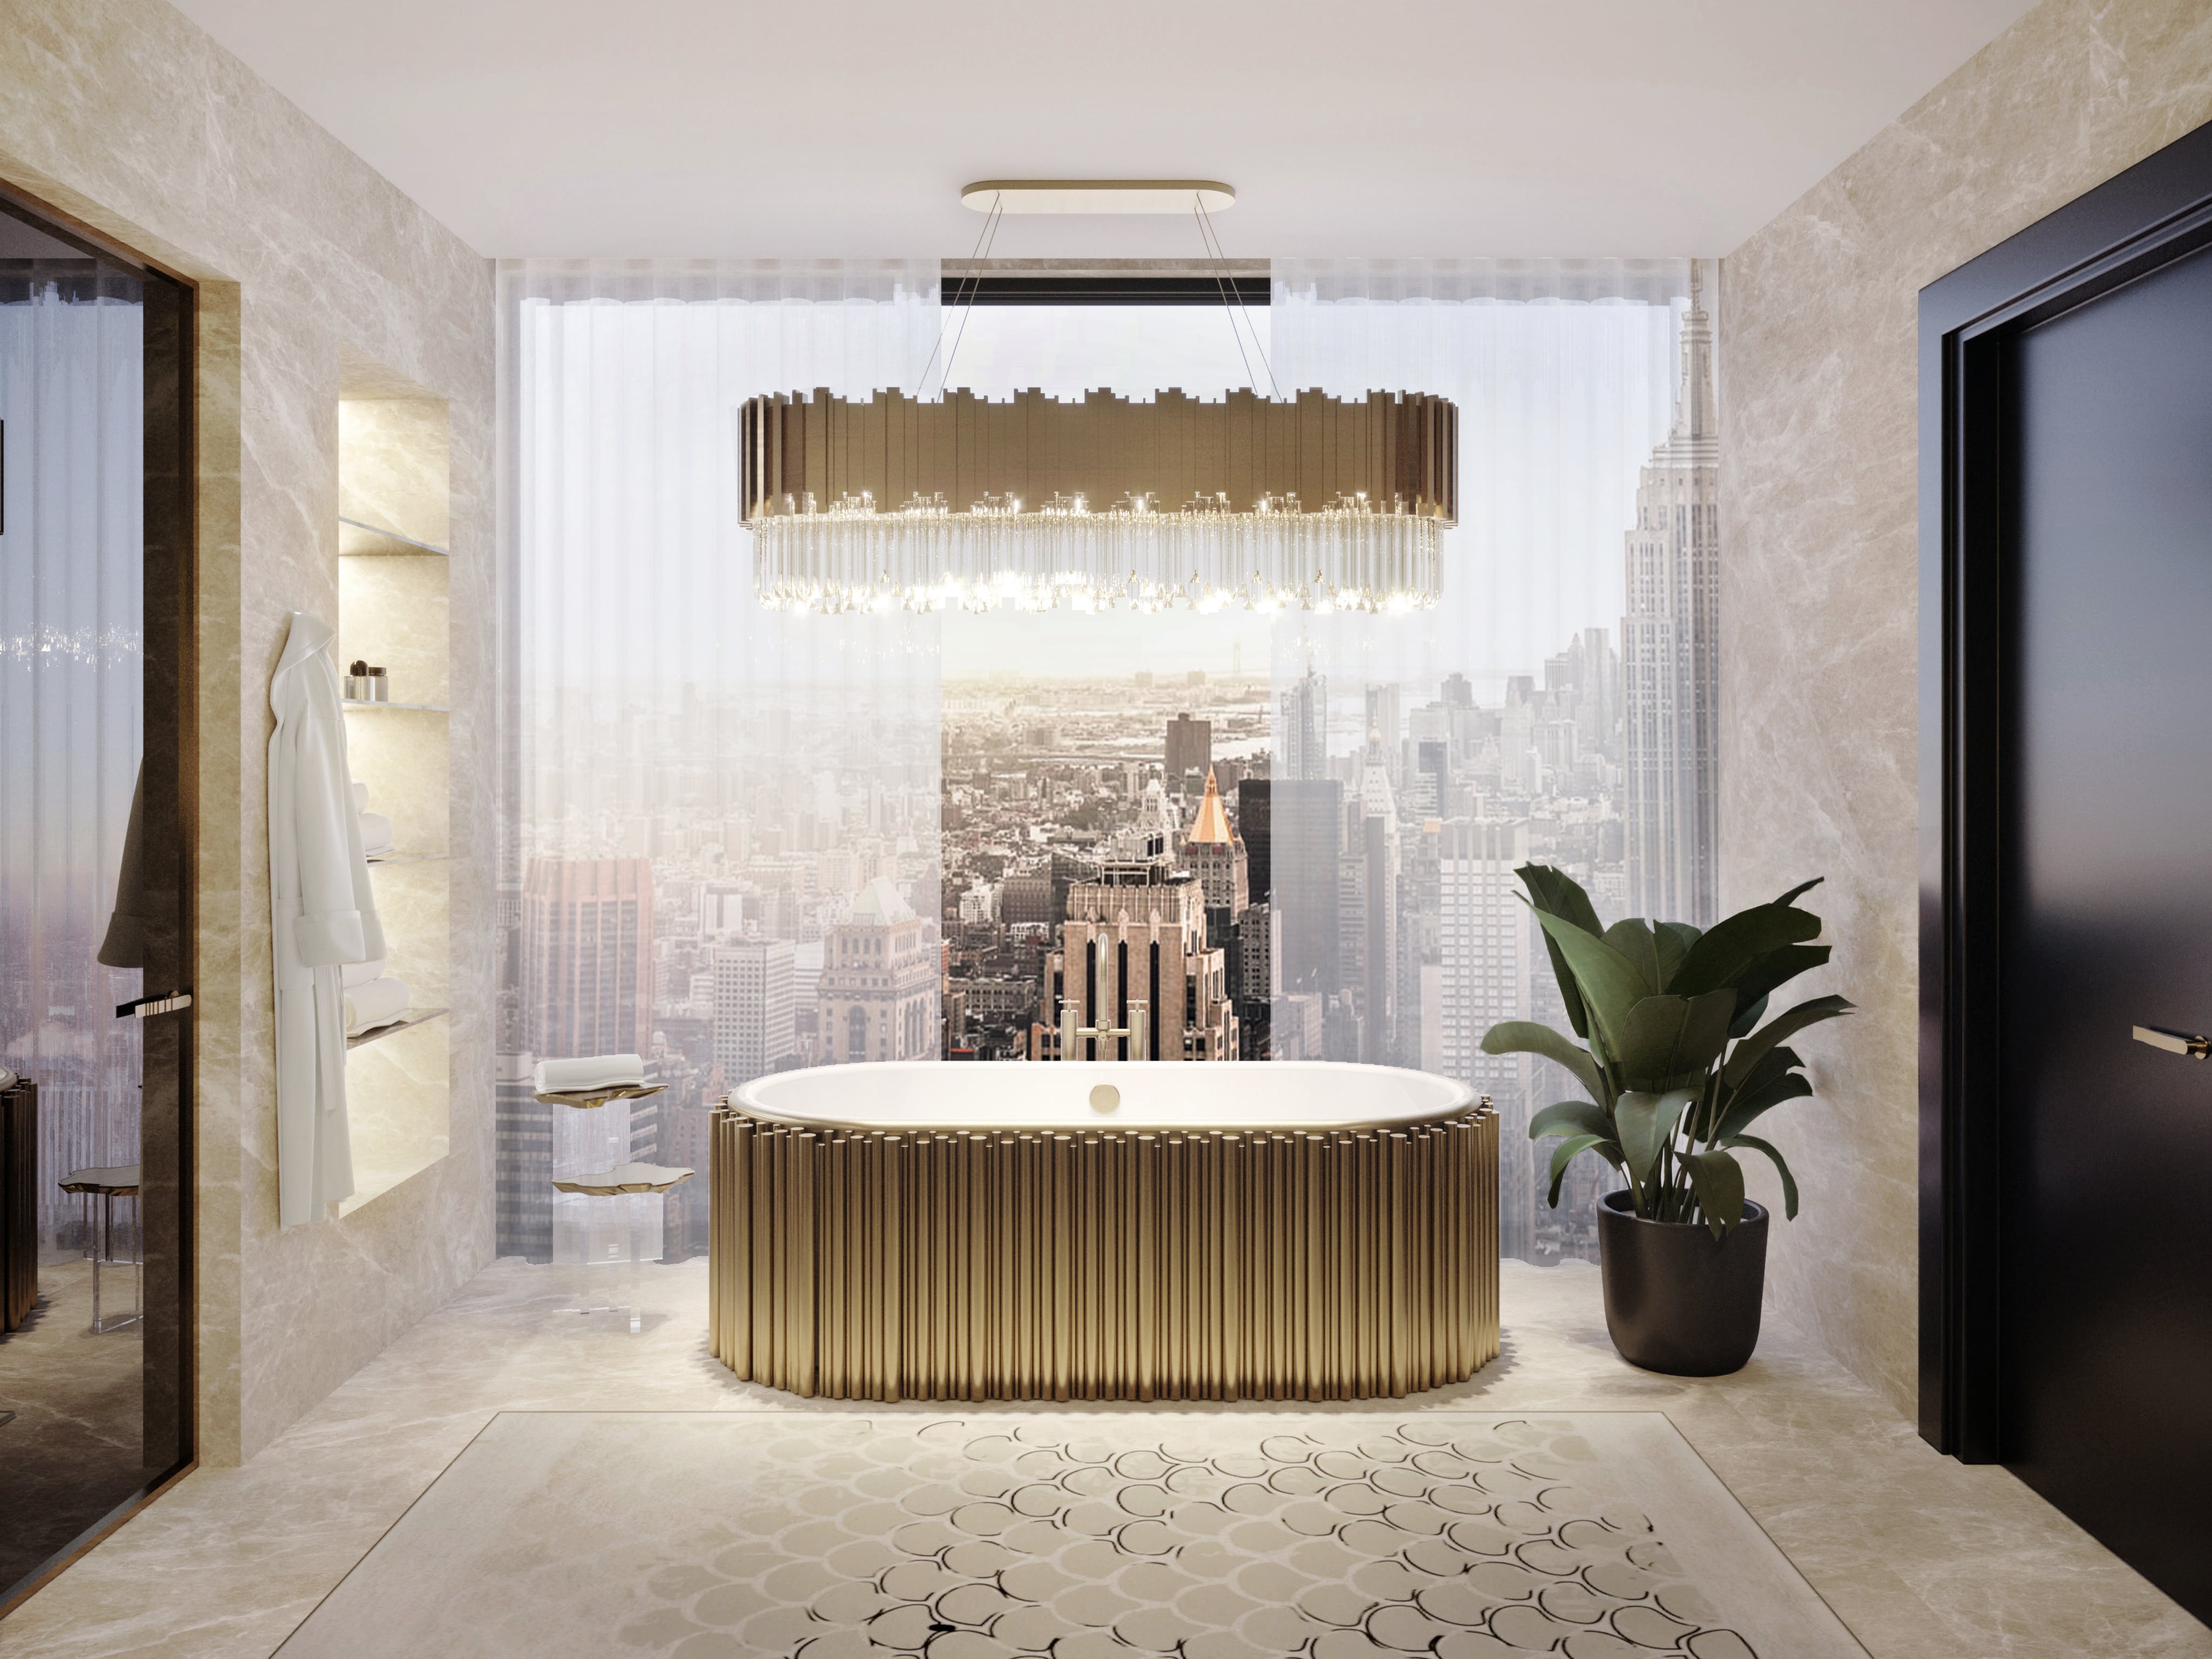 Golden Bathtub In Luxurious Modern Bathroom - Home'Society